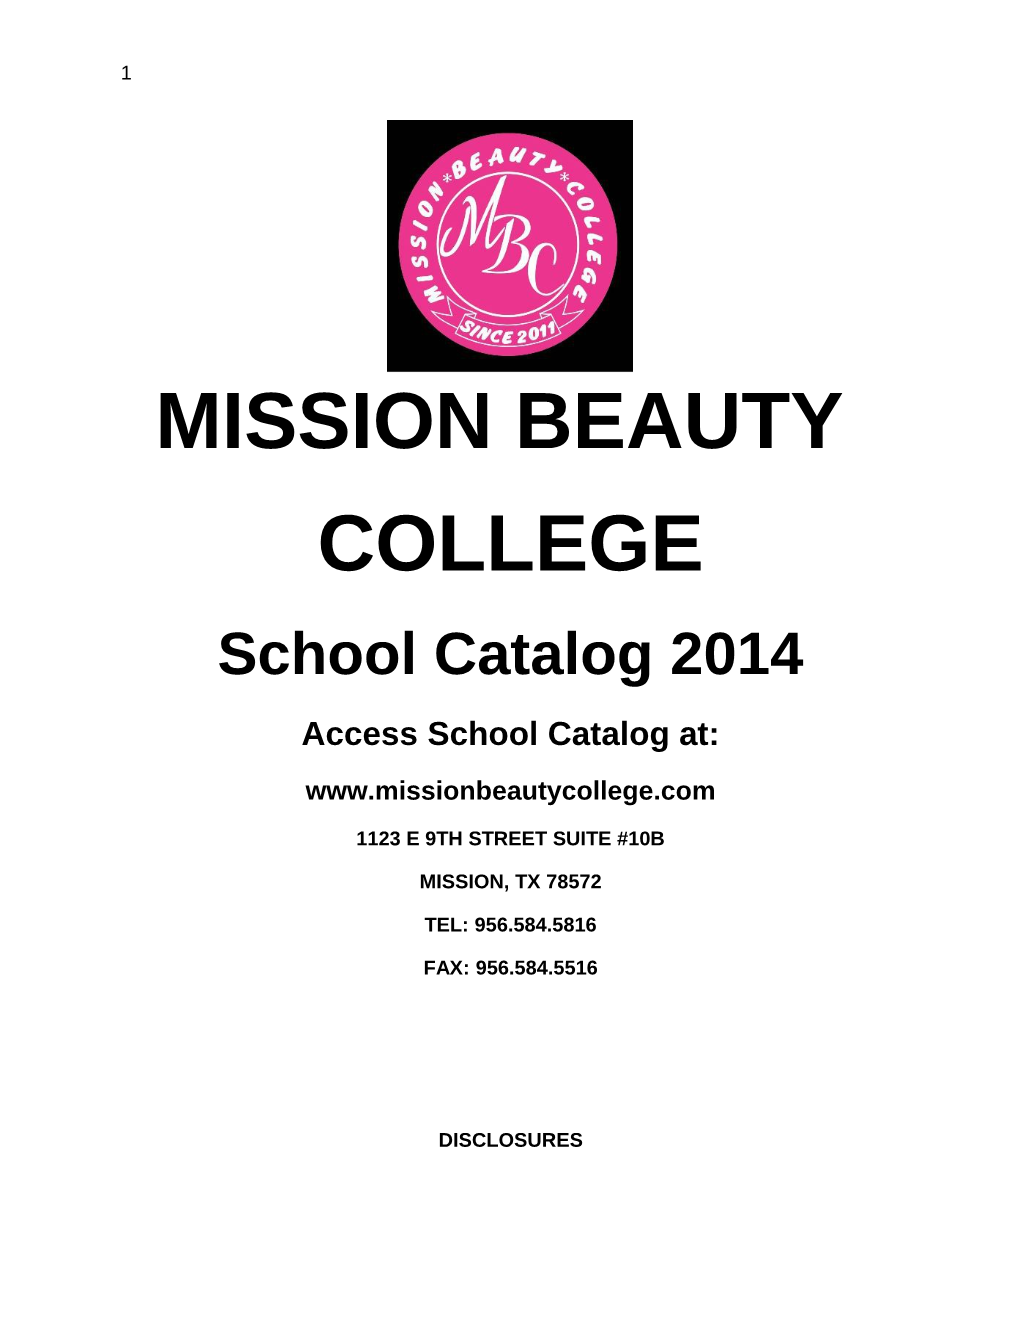 School Catalog 2014